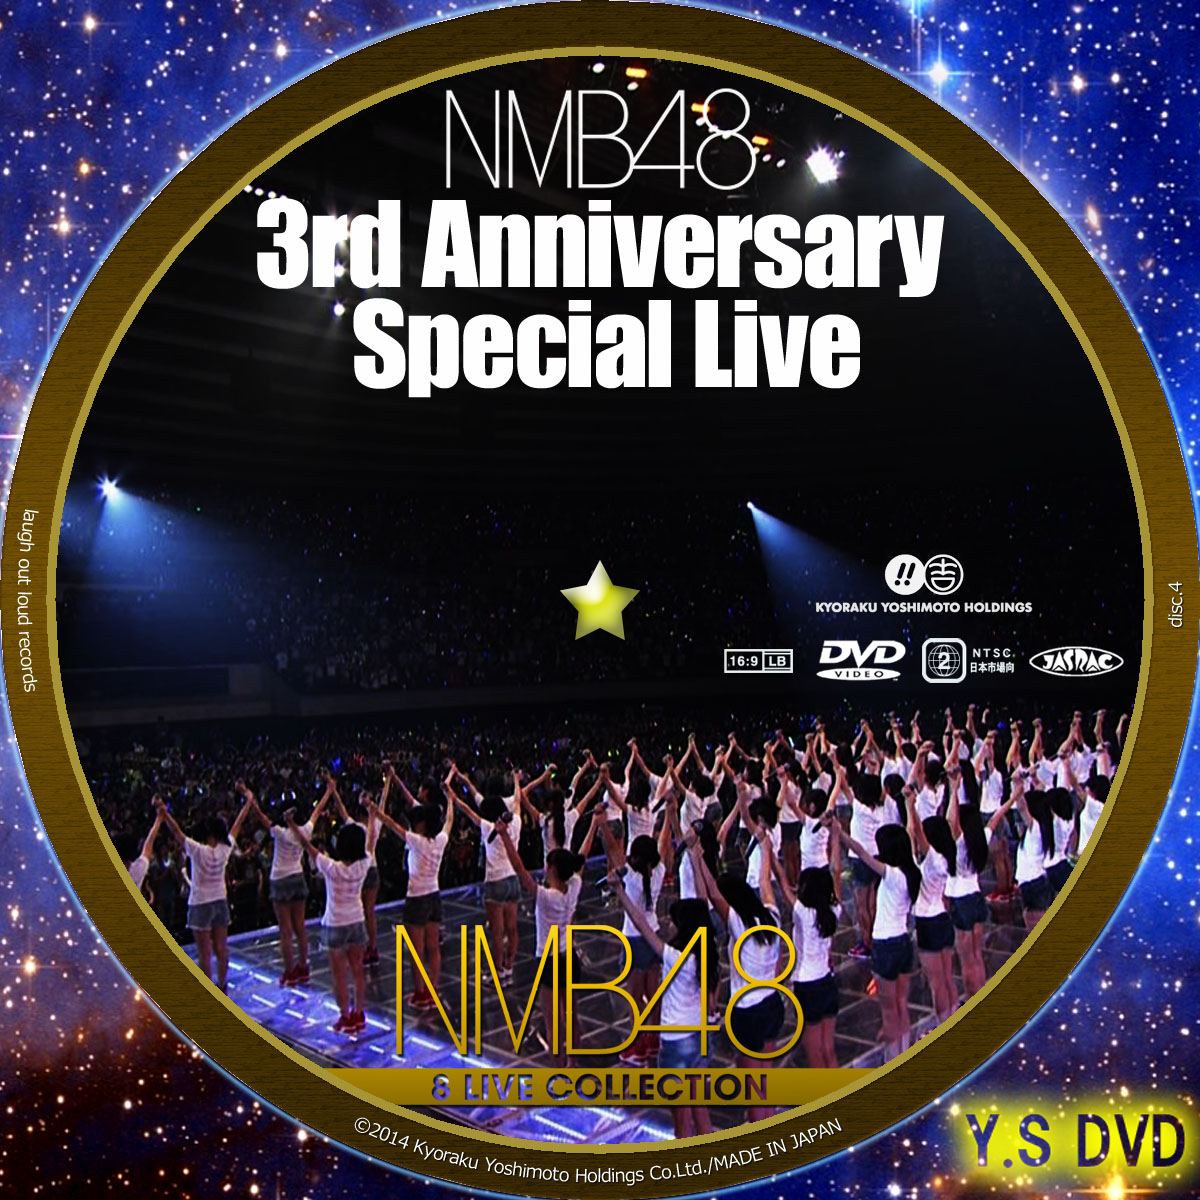 NMB48 8 LIVE COLLECTION | Y.SオリジナルDVDラベル